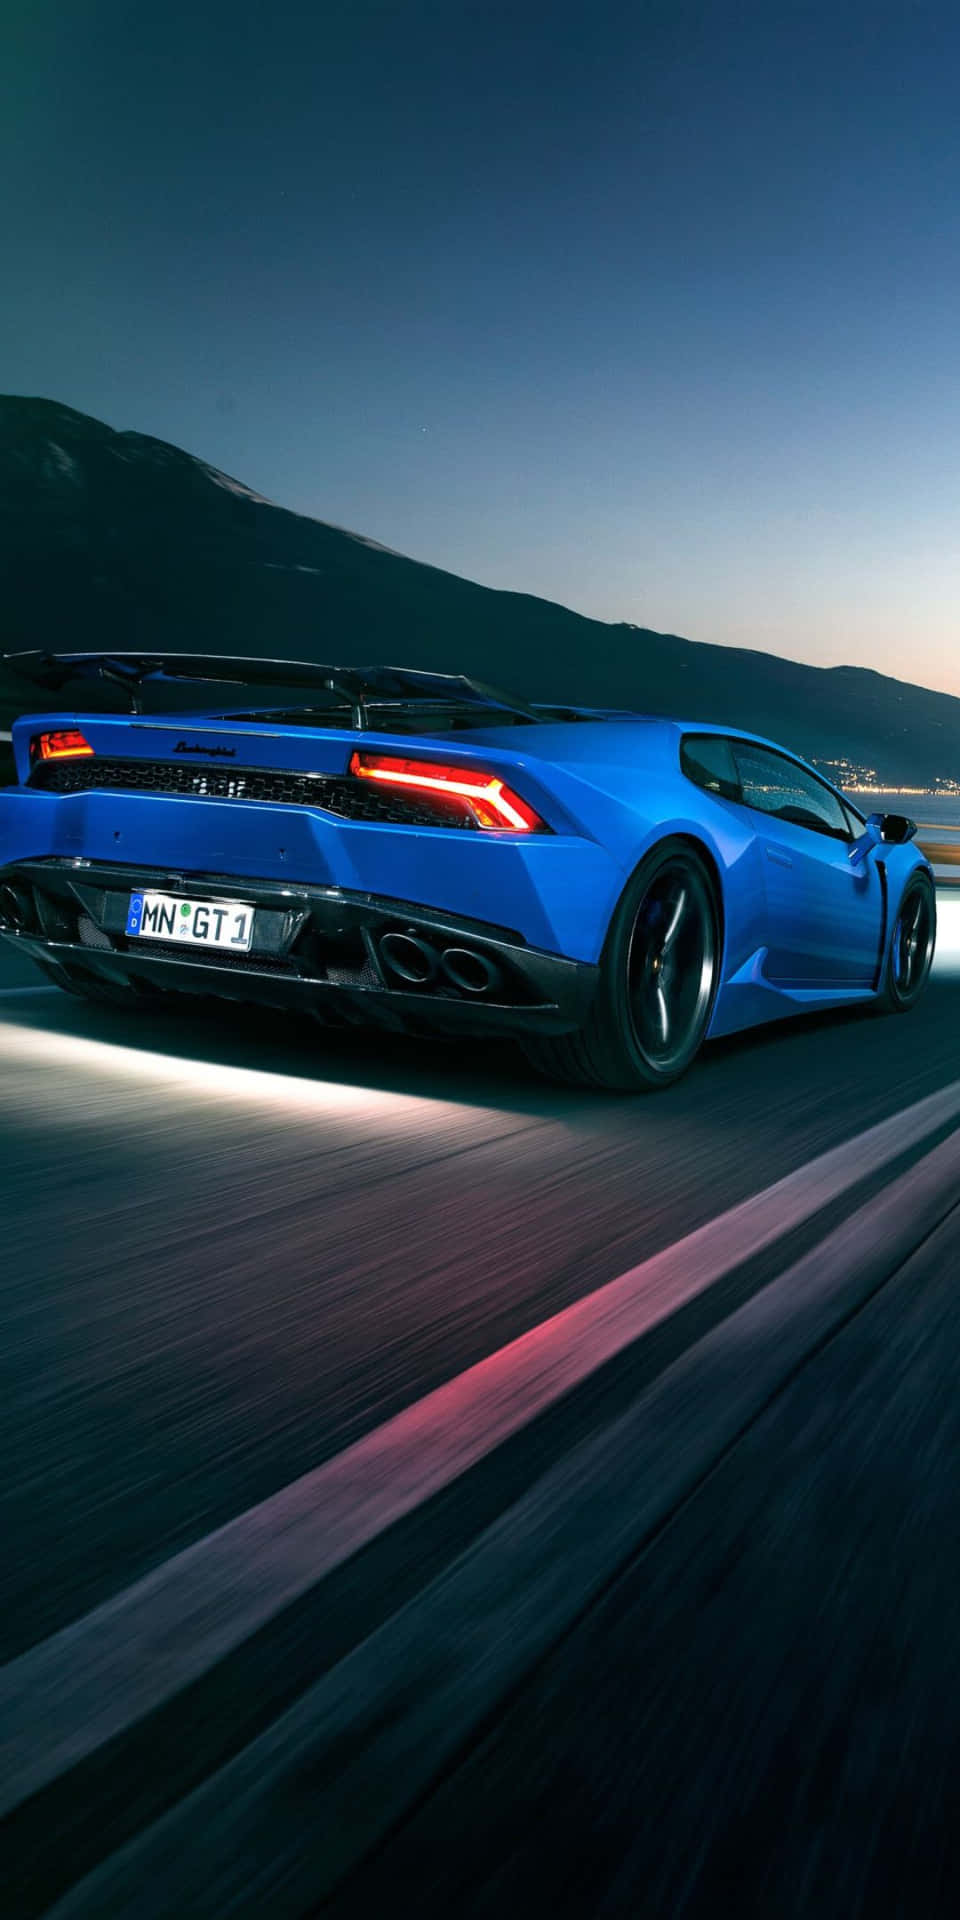 The Blue Lamborghini Huracan Is Driving Down The Road